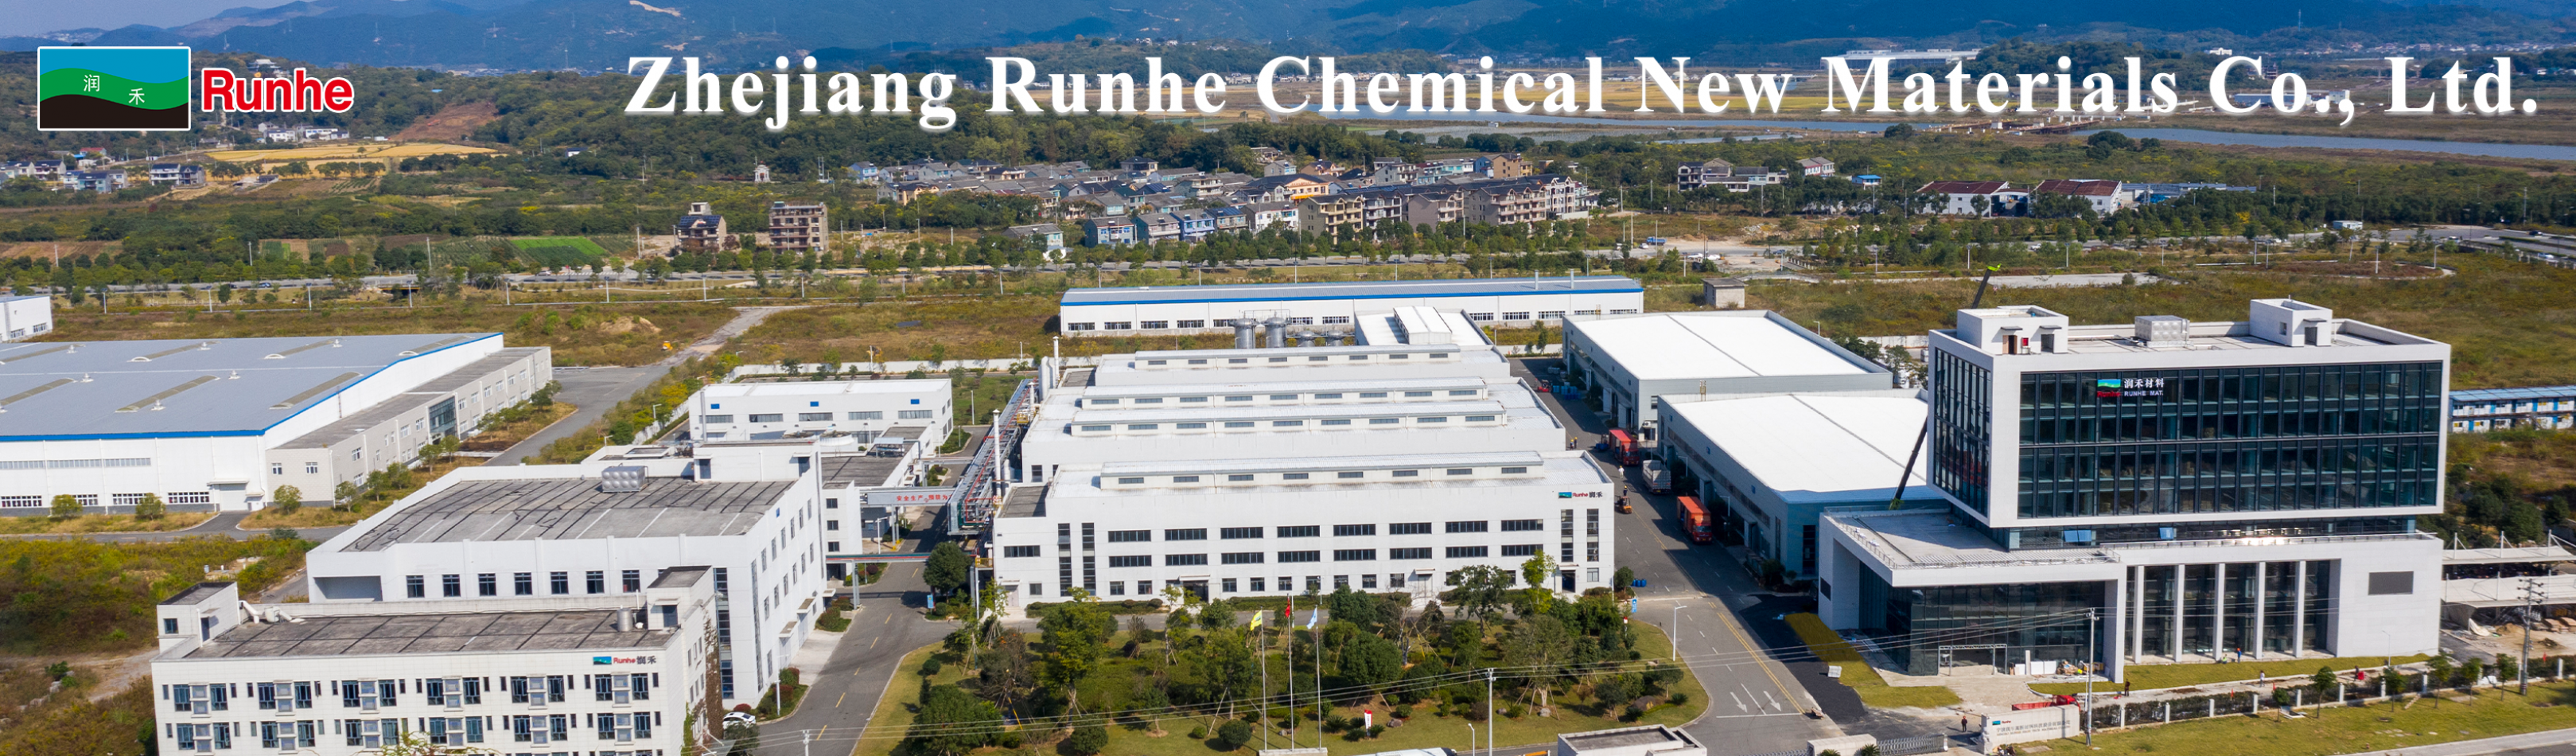 ZHEJIANG RUNHE CHEMICAL NEW MATERIALS CO., LTD